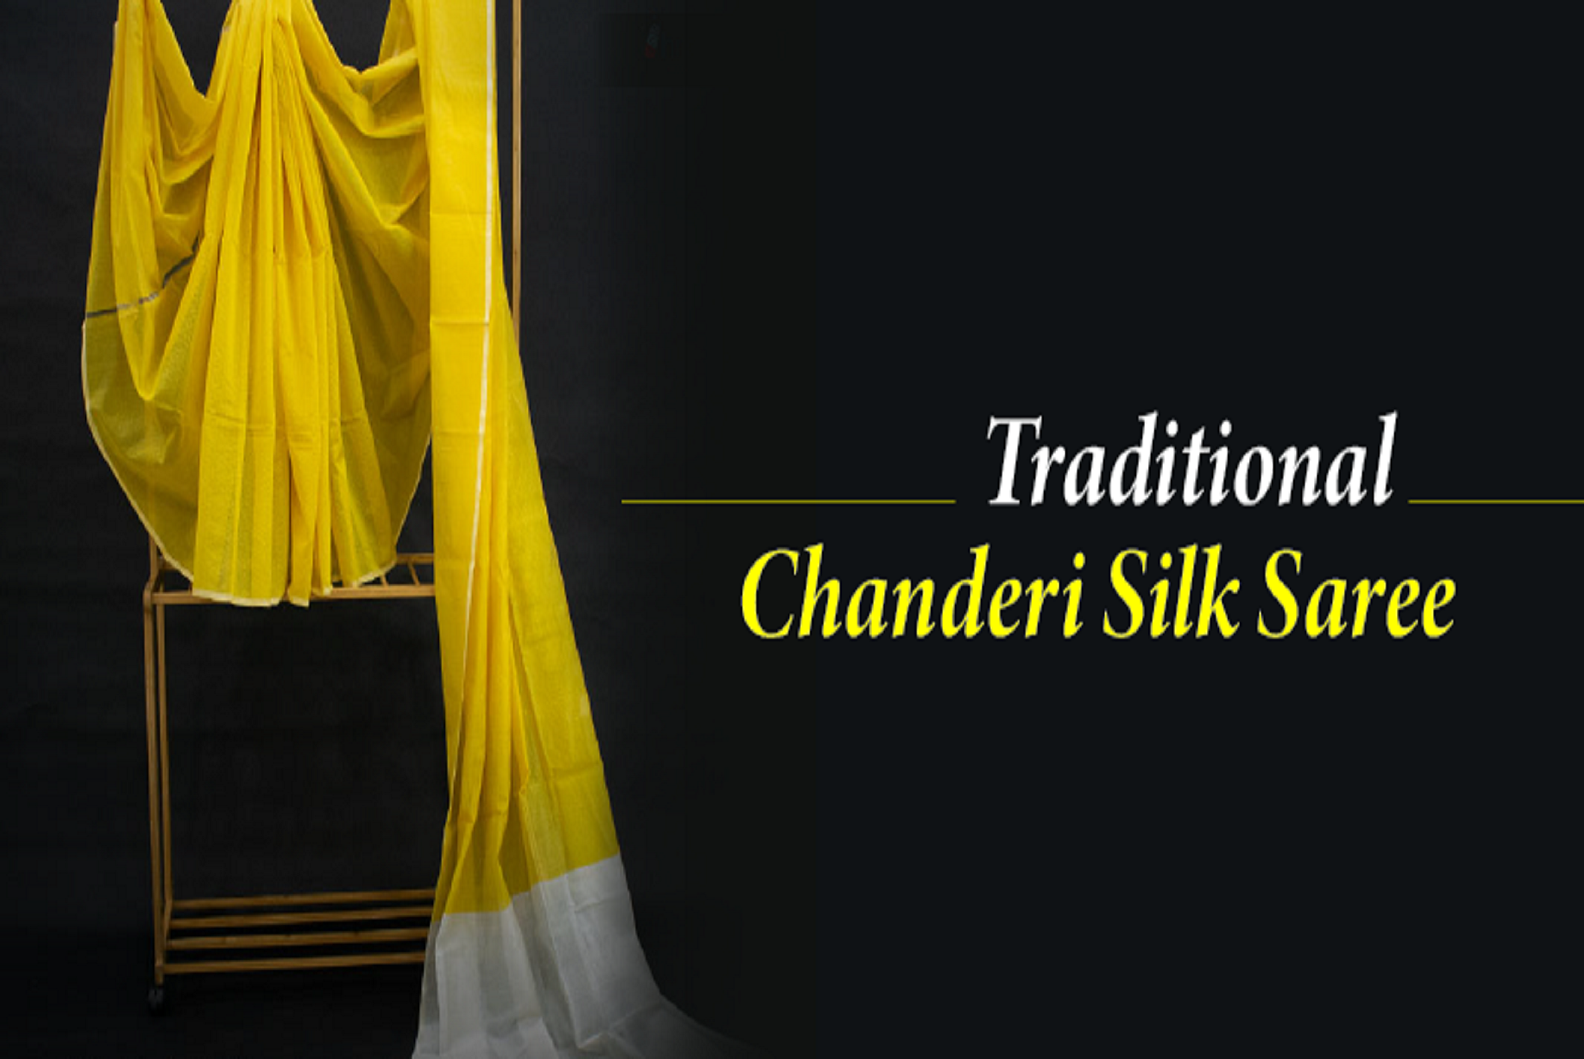 Chanderi Silk Sarees: A Celebration Of India’s Rich Textile Heritage